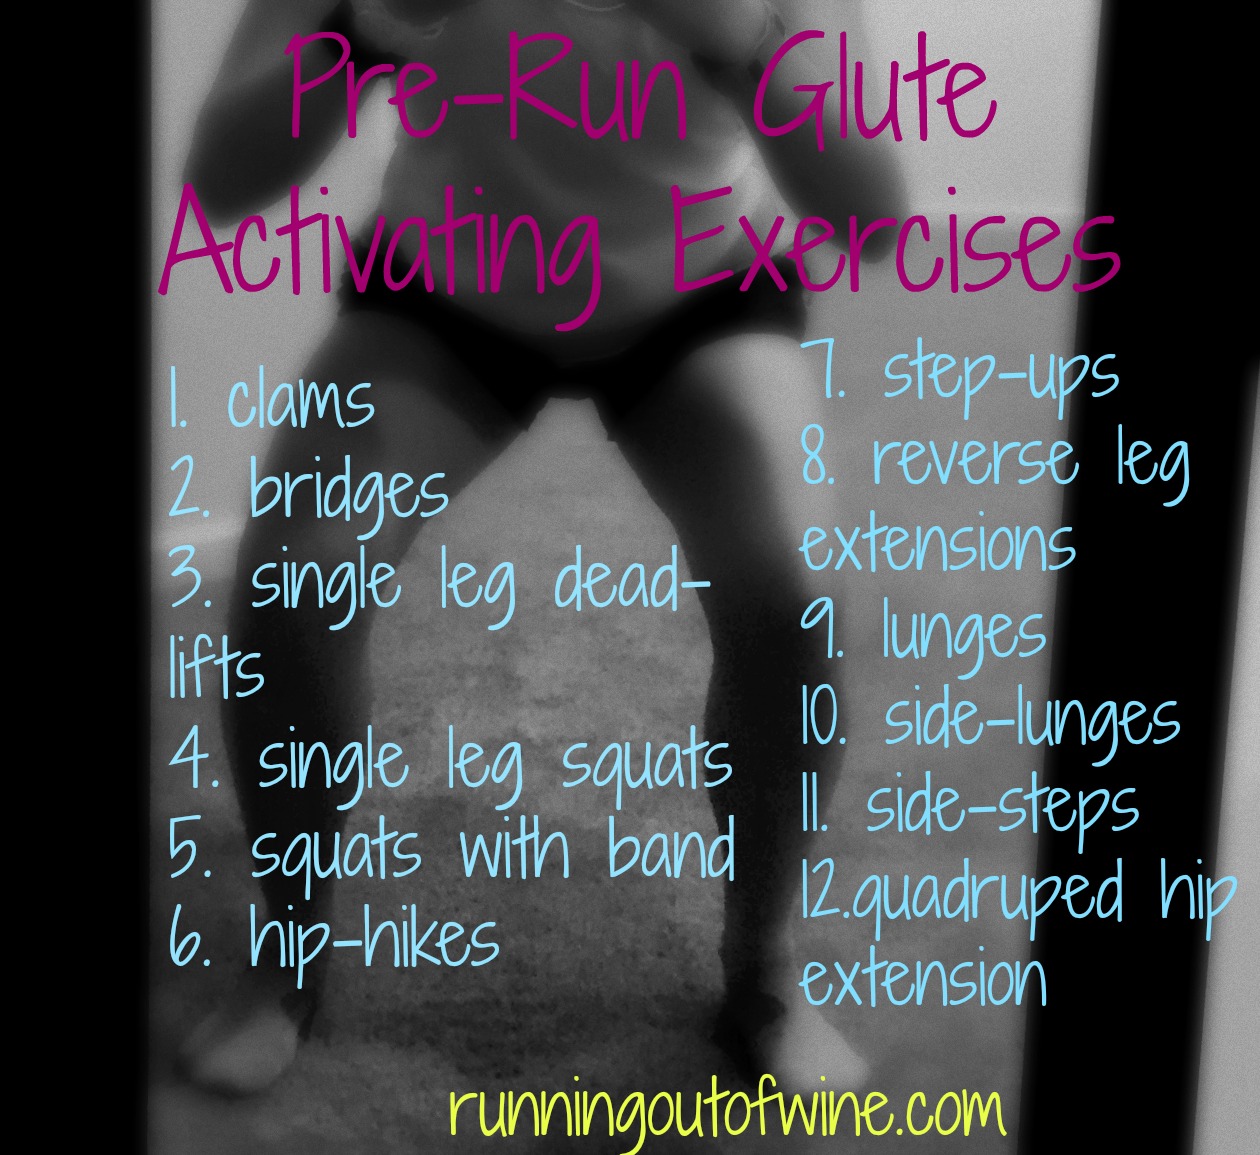 prerun glute activating exercises